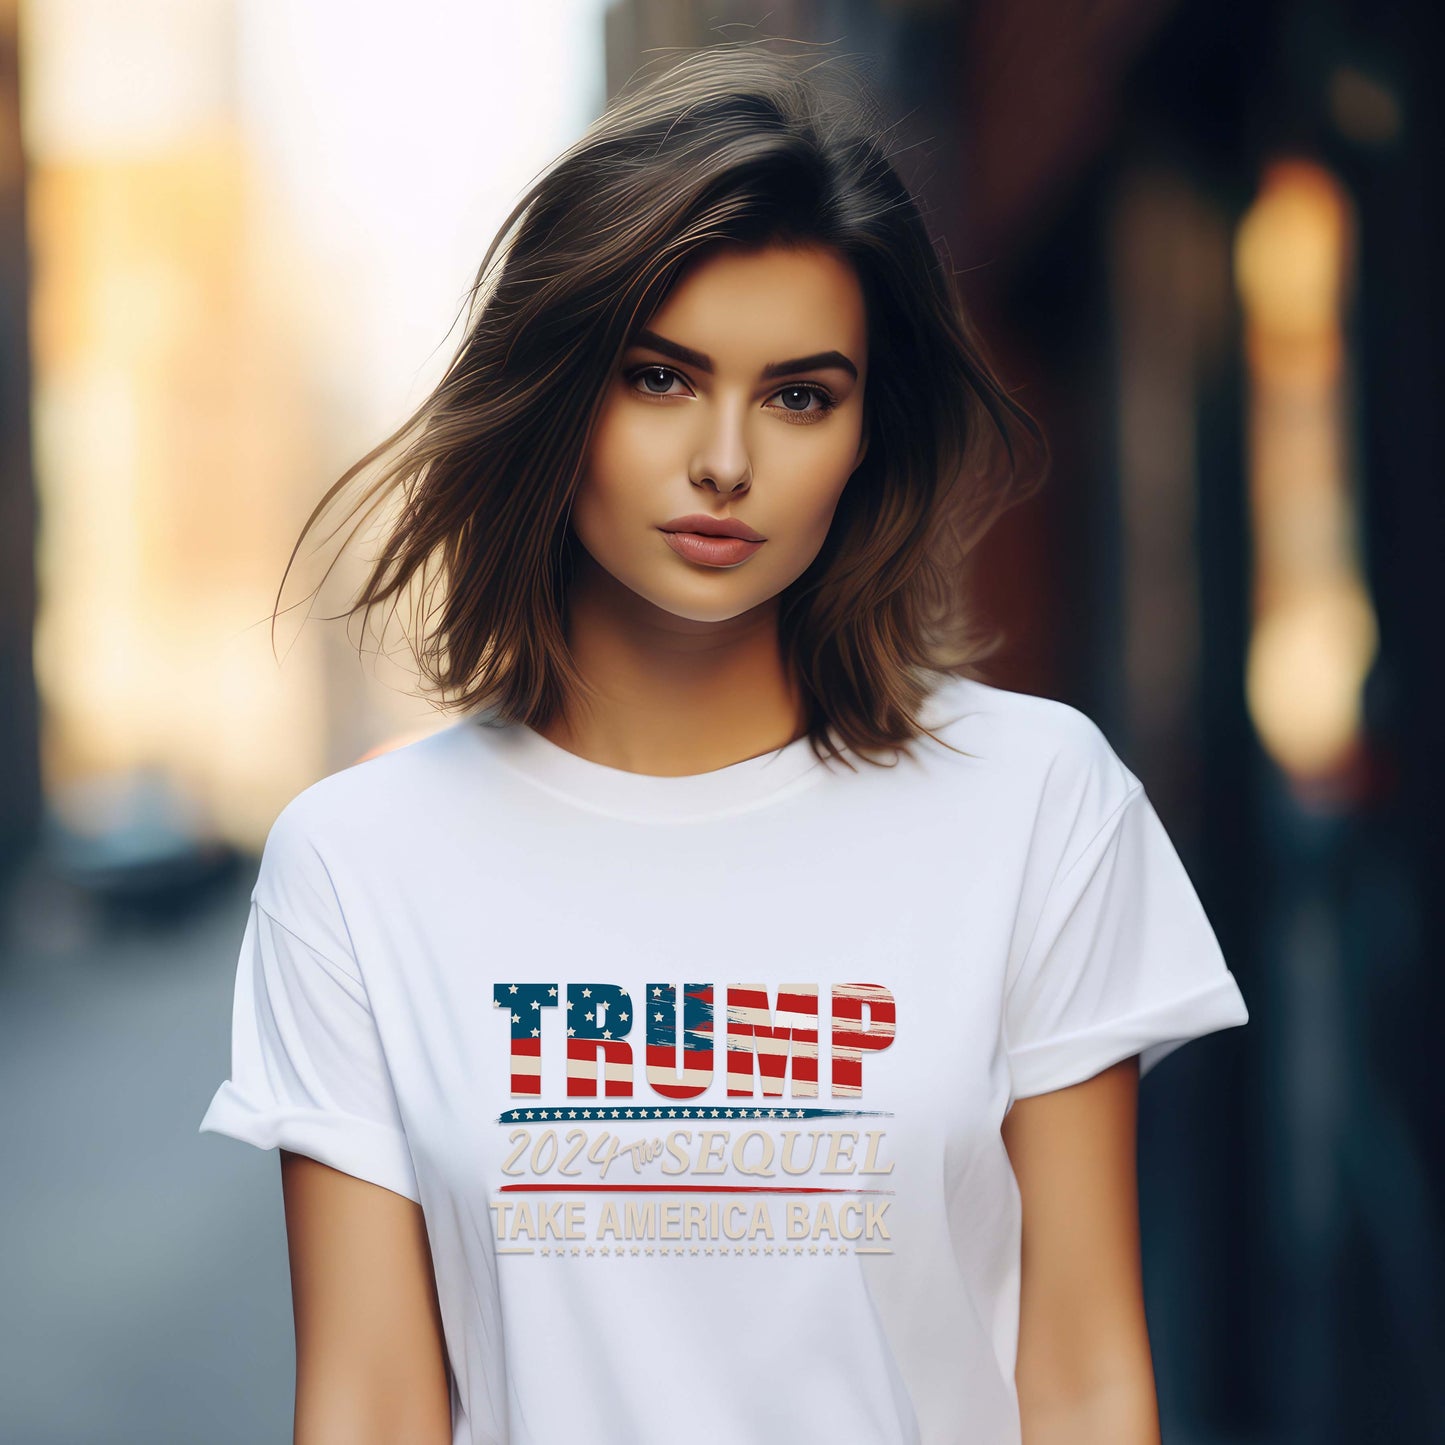 Trump 2024 The Sequel T Shirt | Take America Back DJT Sweatshirt | Donald Trump 2024nald Trump 2024